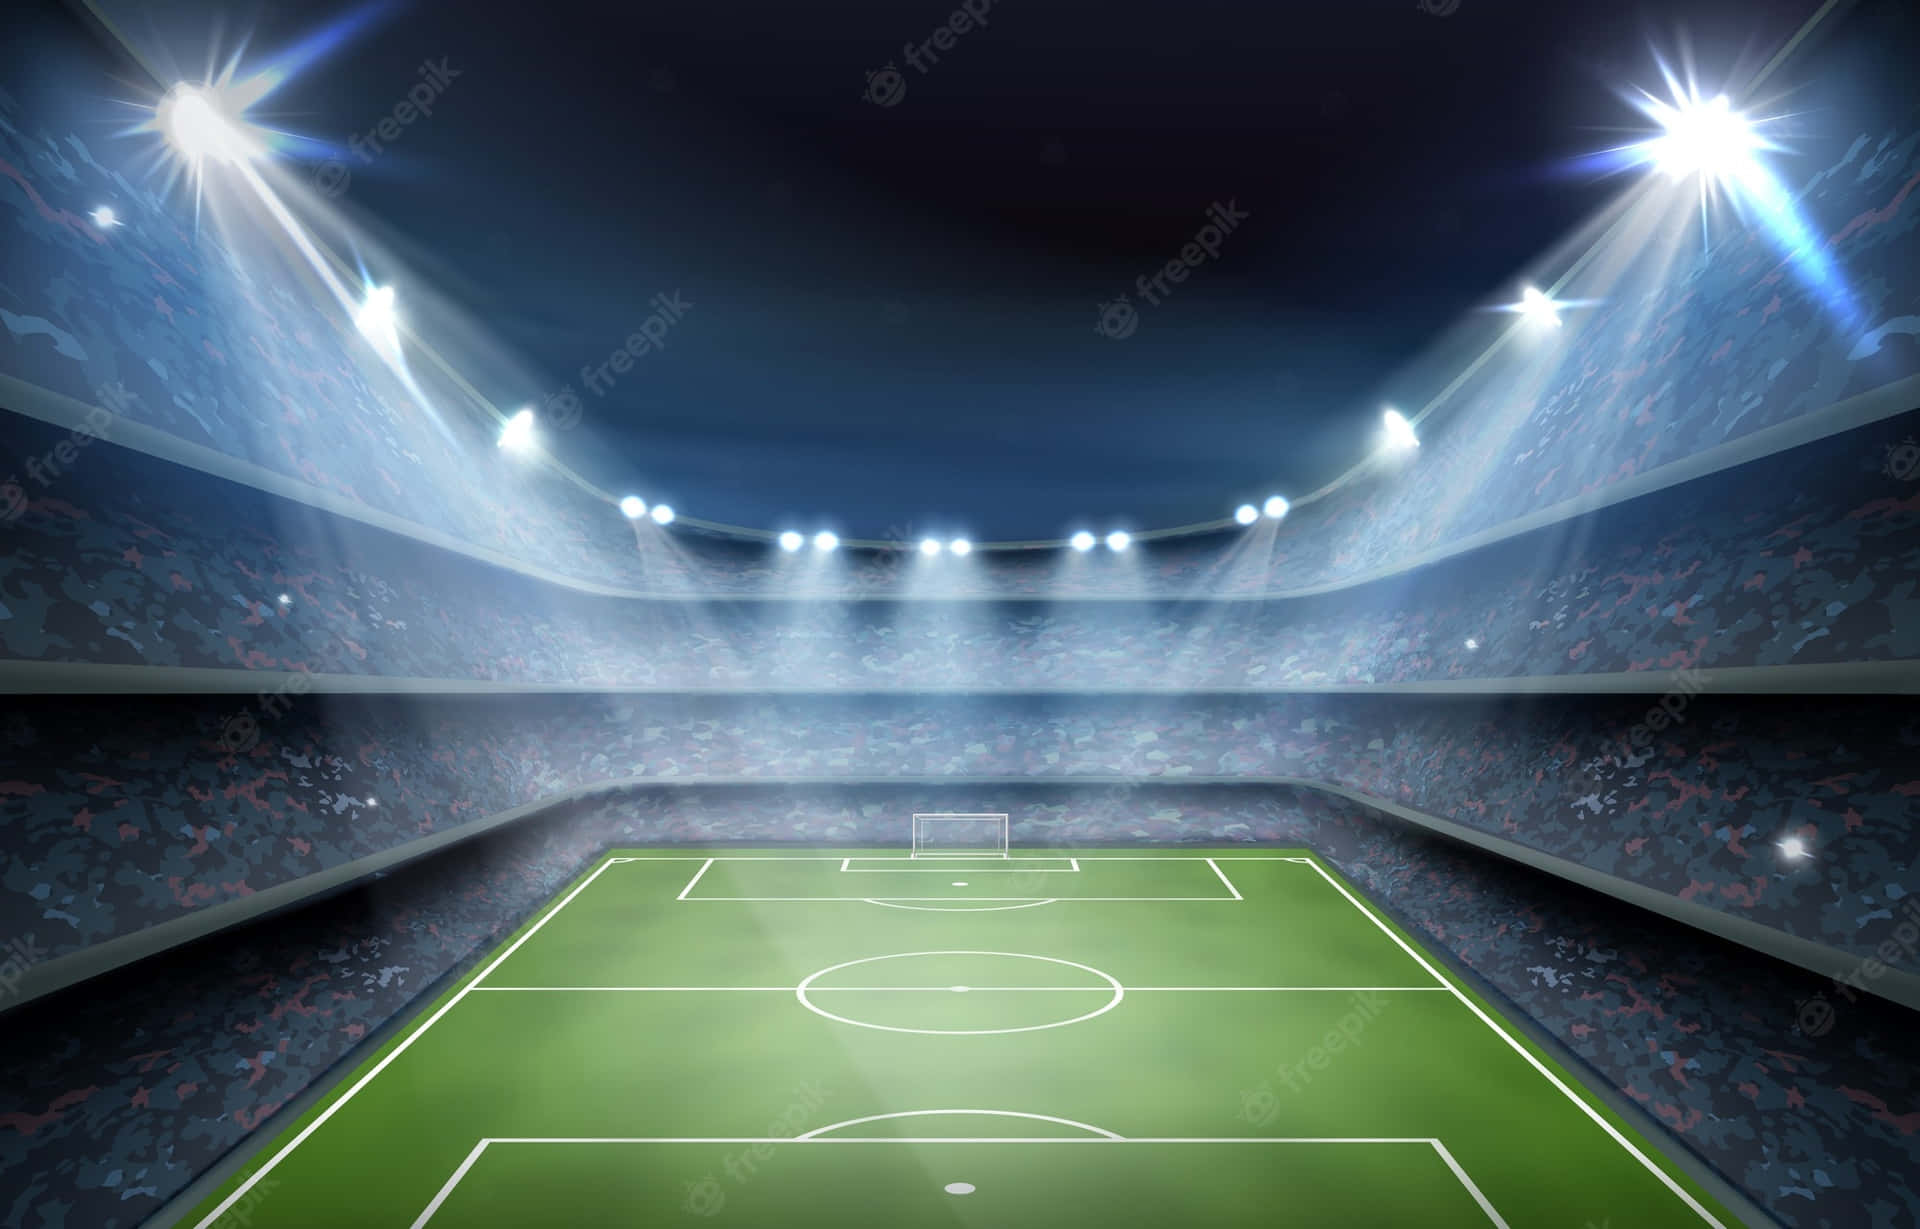 Fans enjoying a thrilling match at a packed soccer stadium Wallpaper